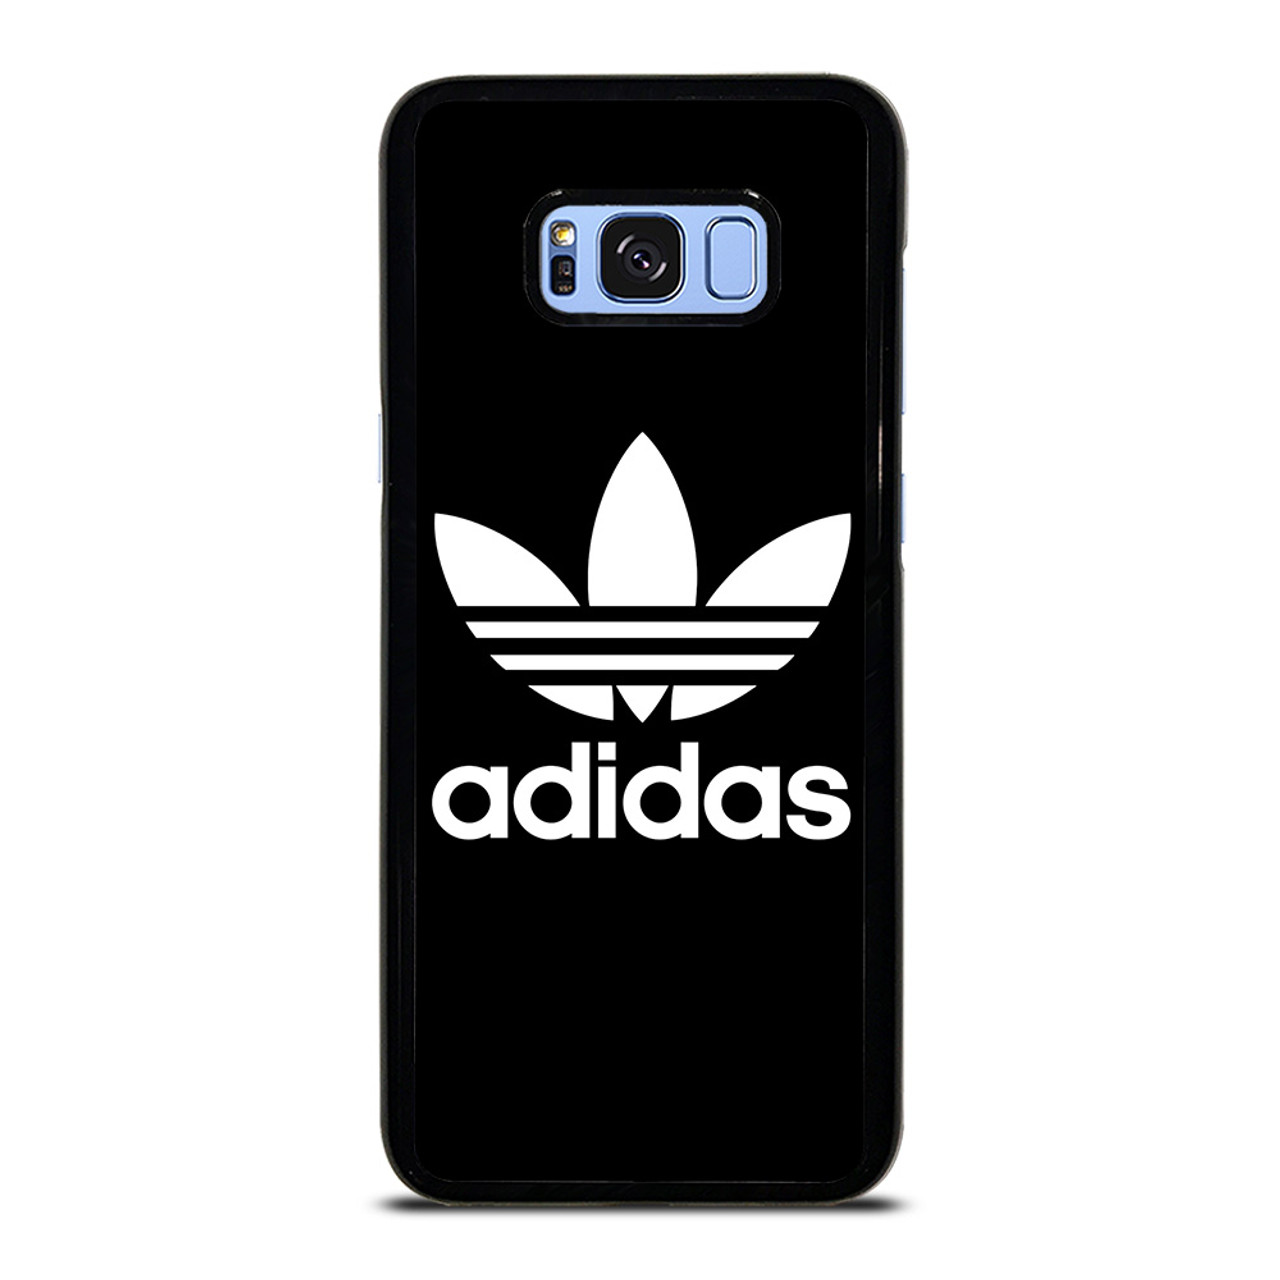 ADIDAS BLACK Samsung Galaxy S8 Plus Cover